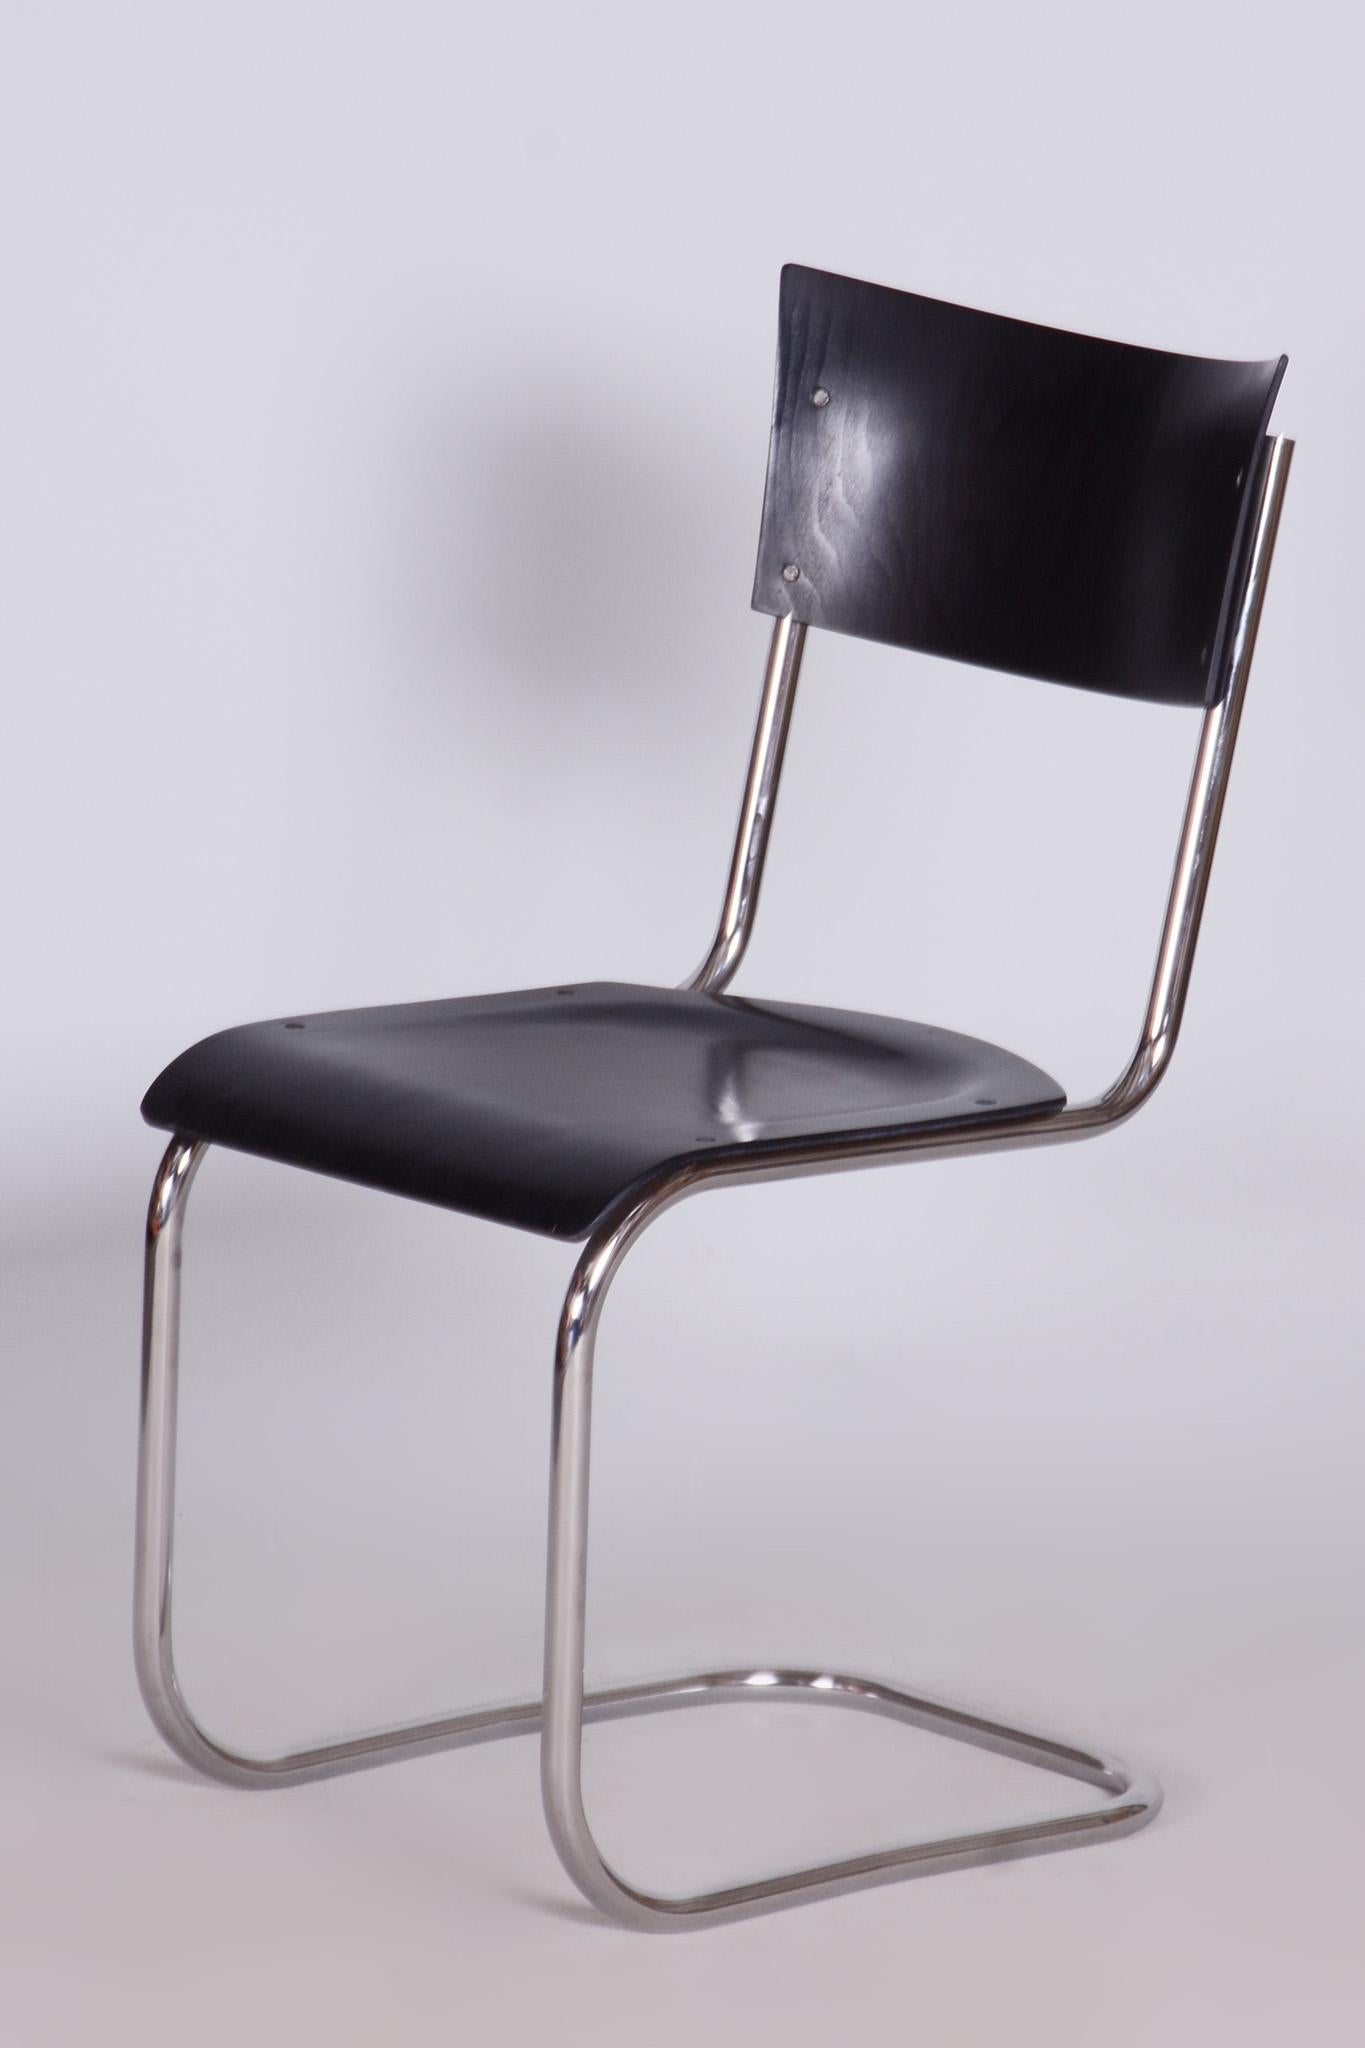 Bauhaus Writing Desk and Chair, R. Slezak, Chrome-Plated Steel, Czechia, 1930s For Sale 5